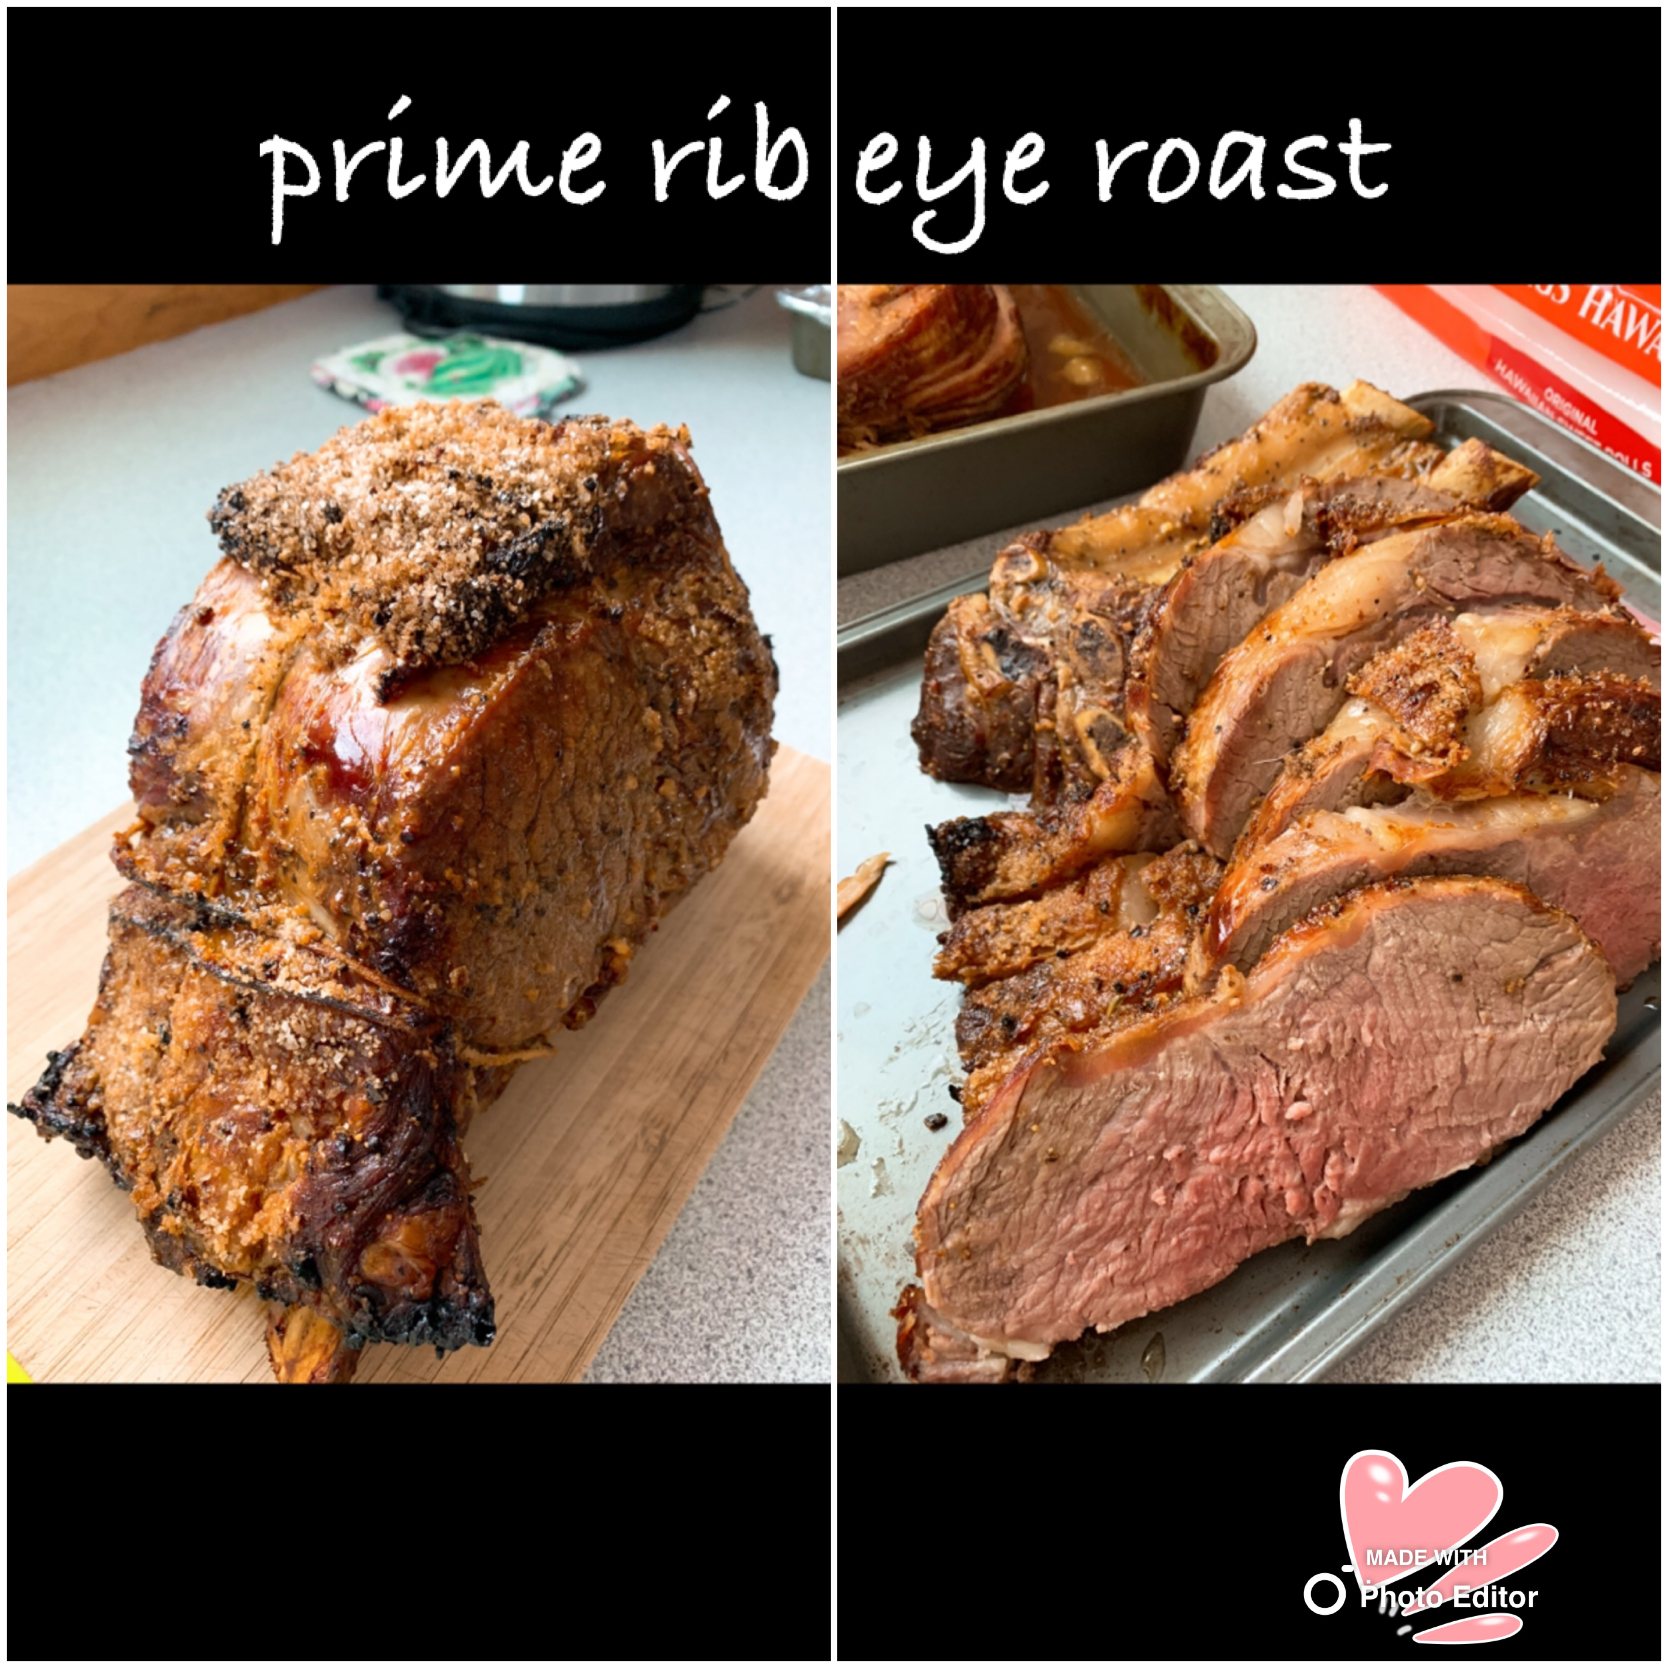 prime rib eye roast;)